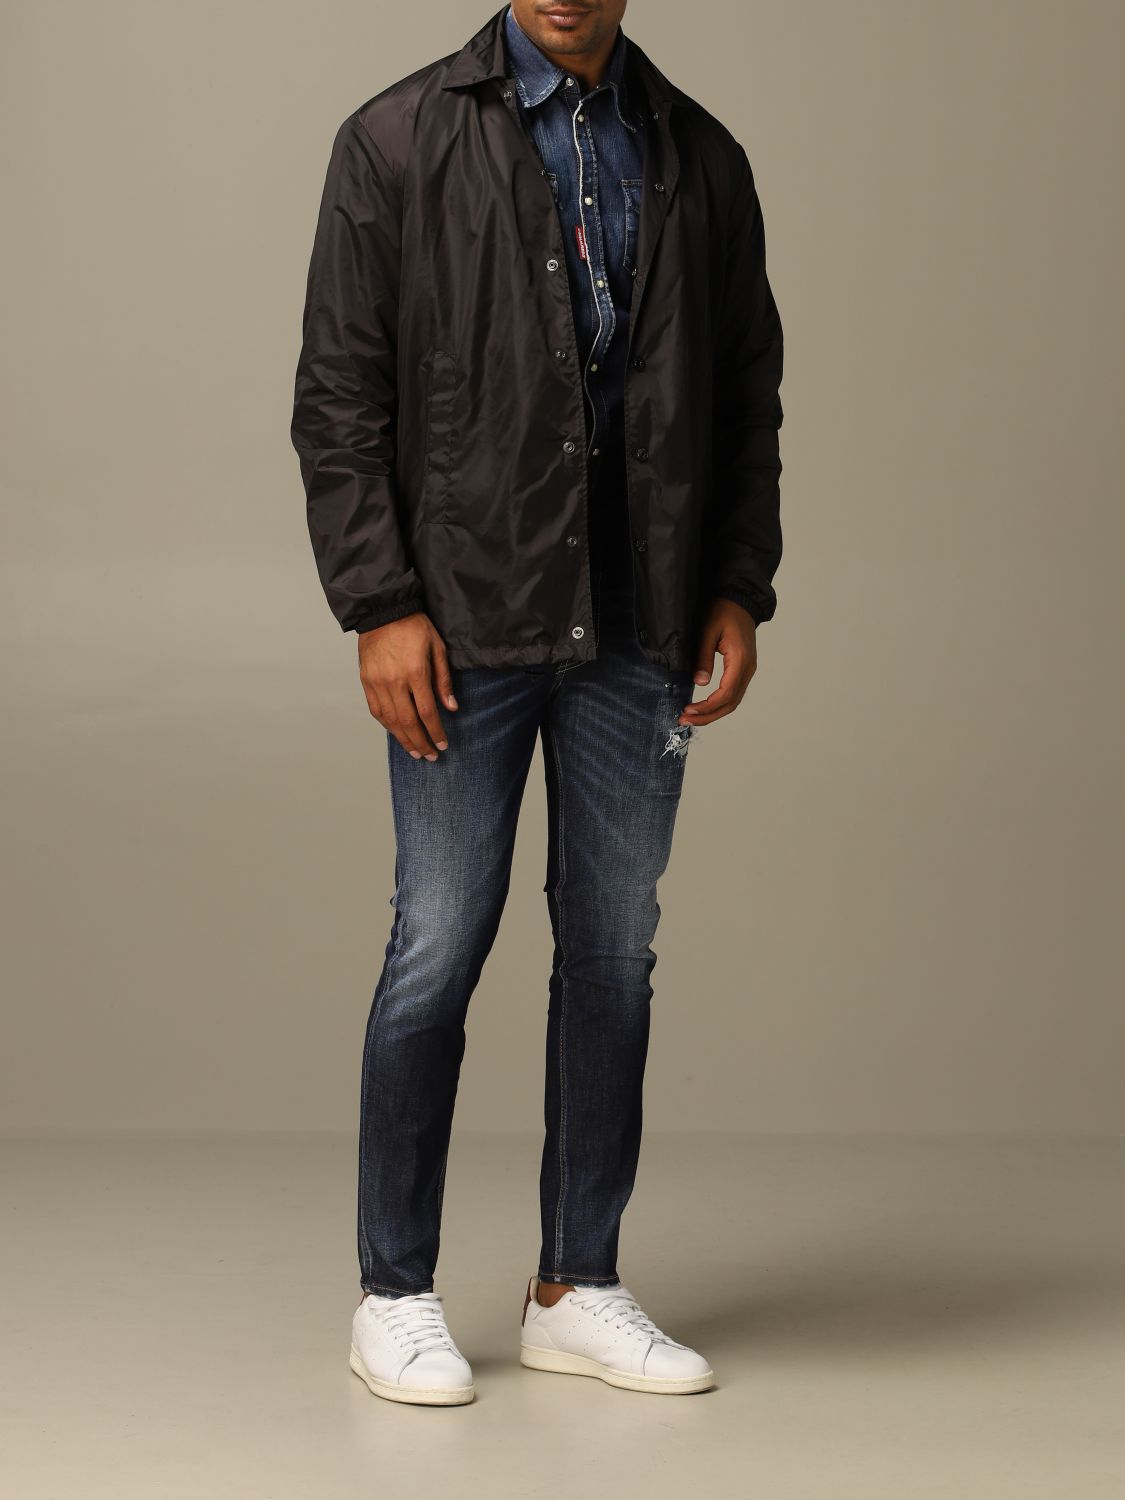 DSQUARED2: Sport jacket Icon in light nylon | Jacket Dsquared2 Men ...